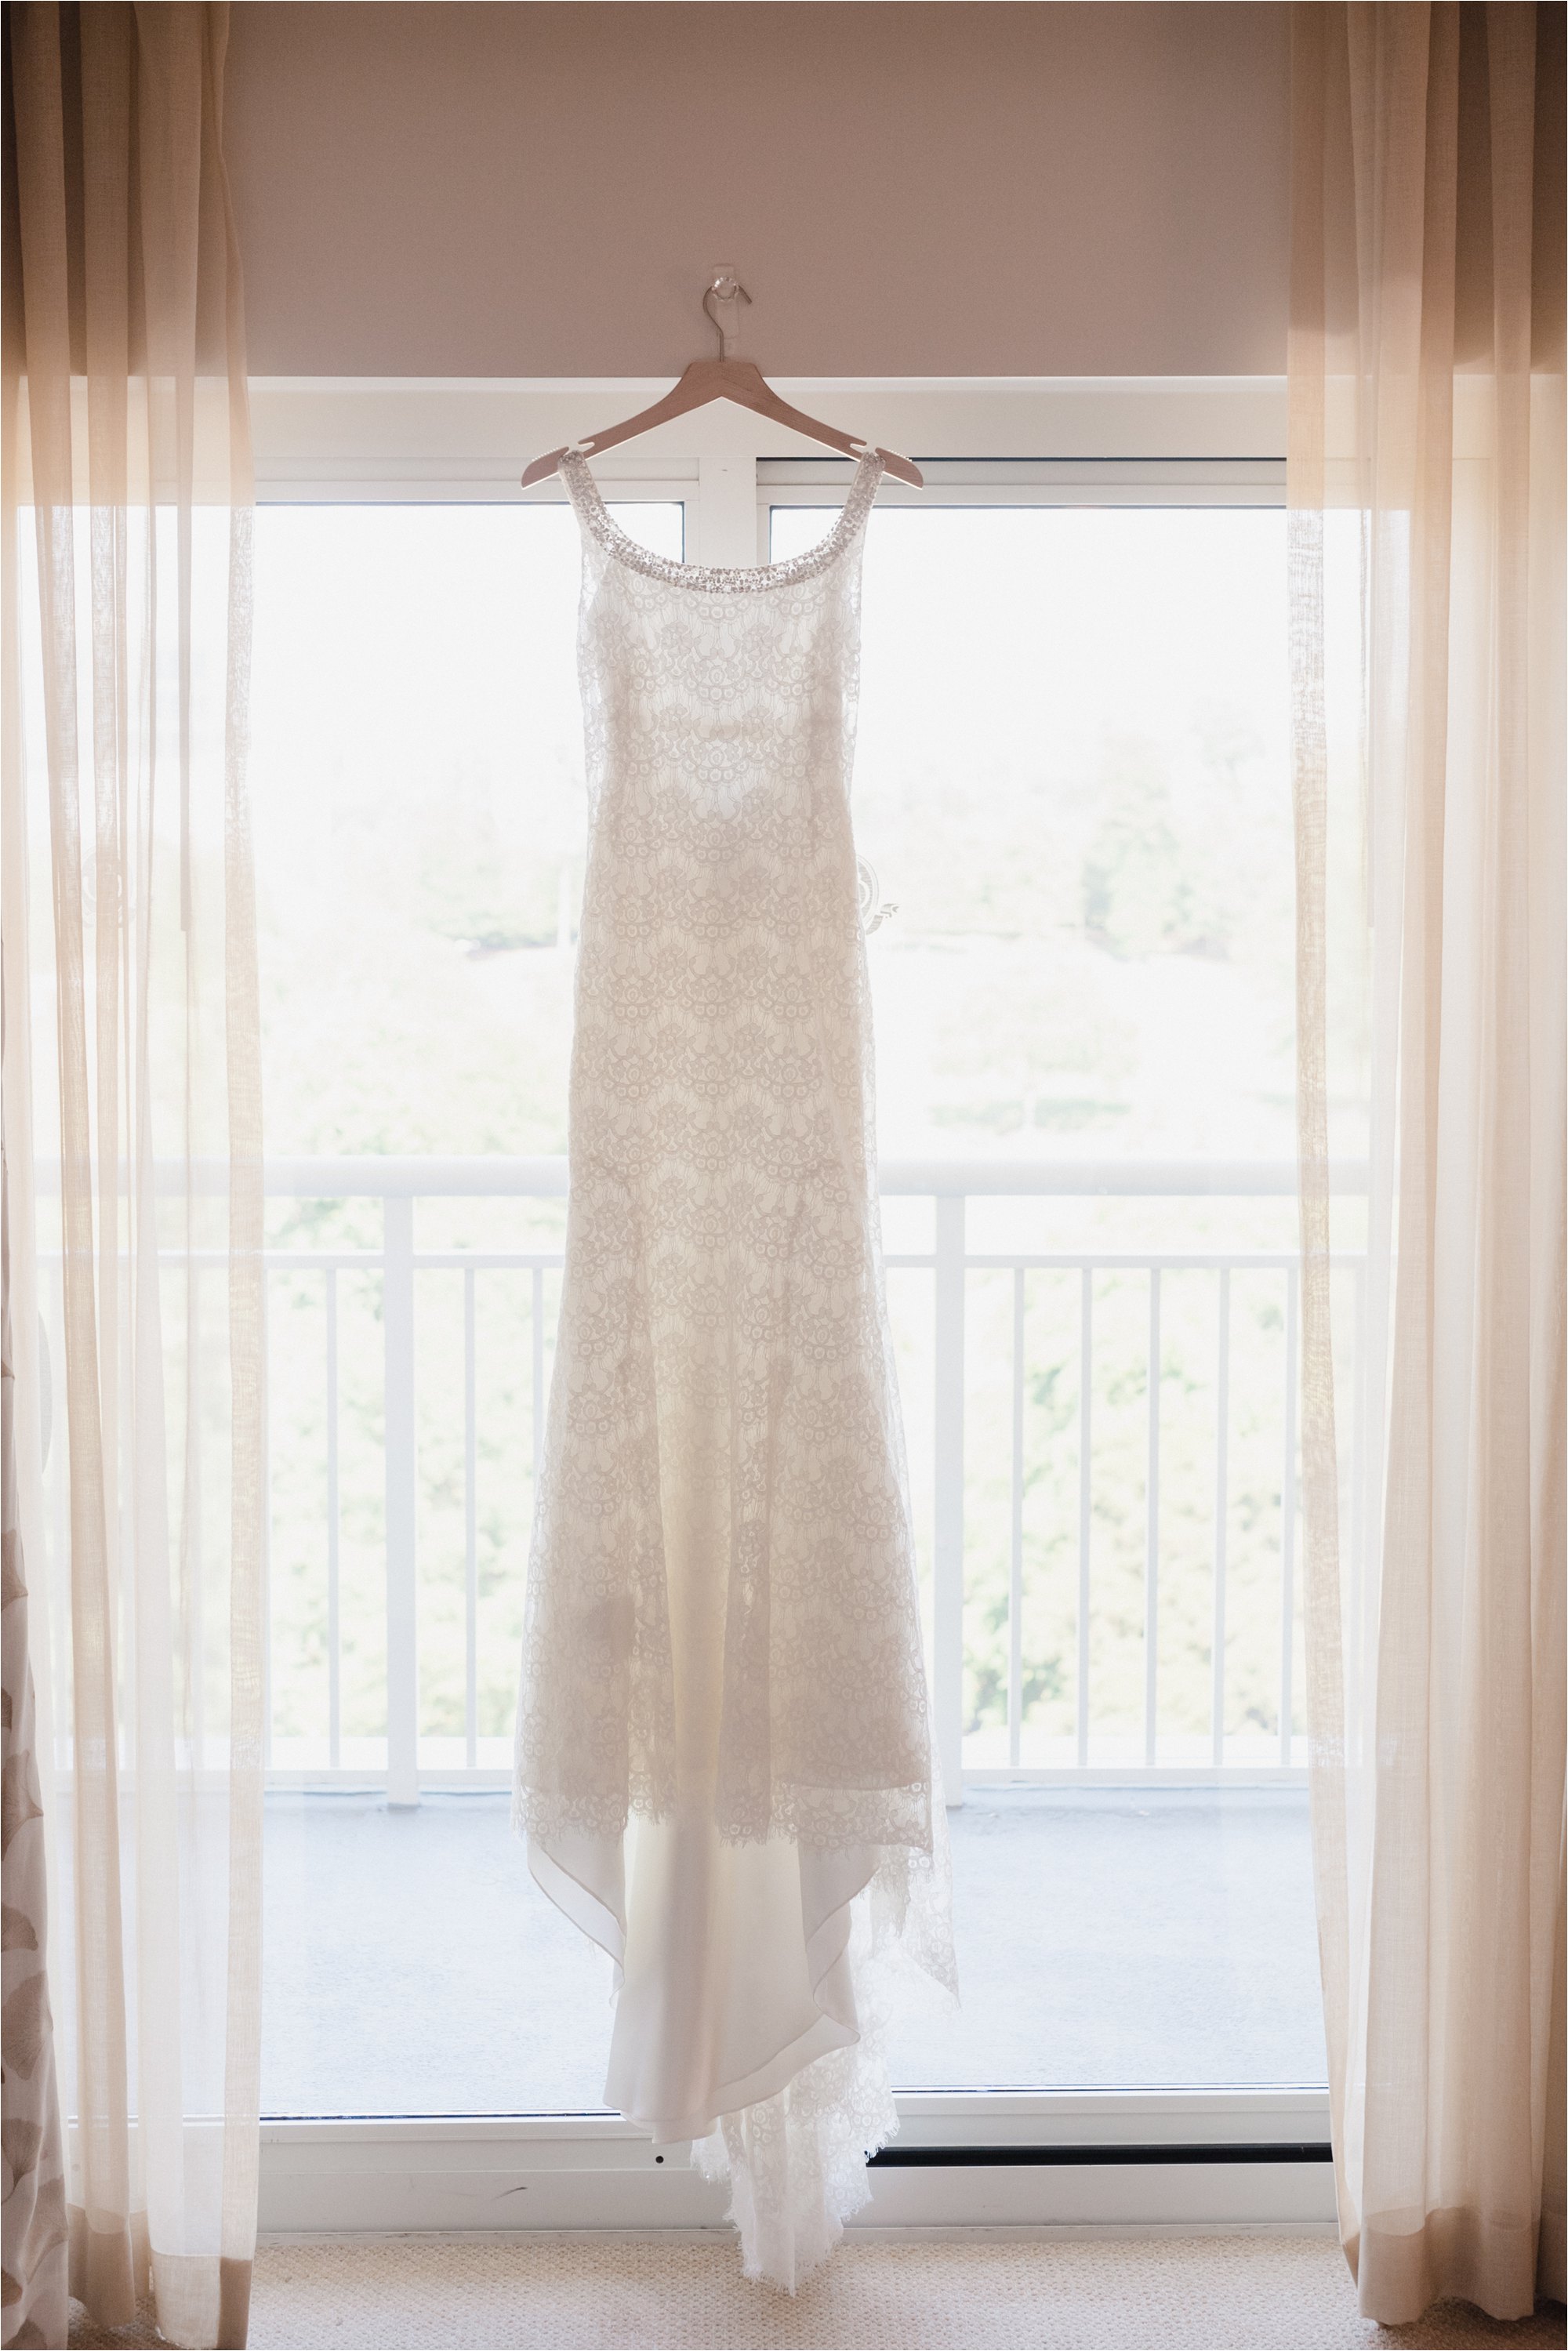 Lace wedding dress hanging in window